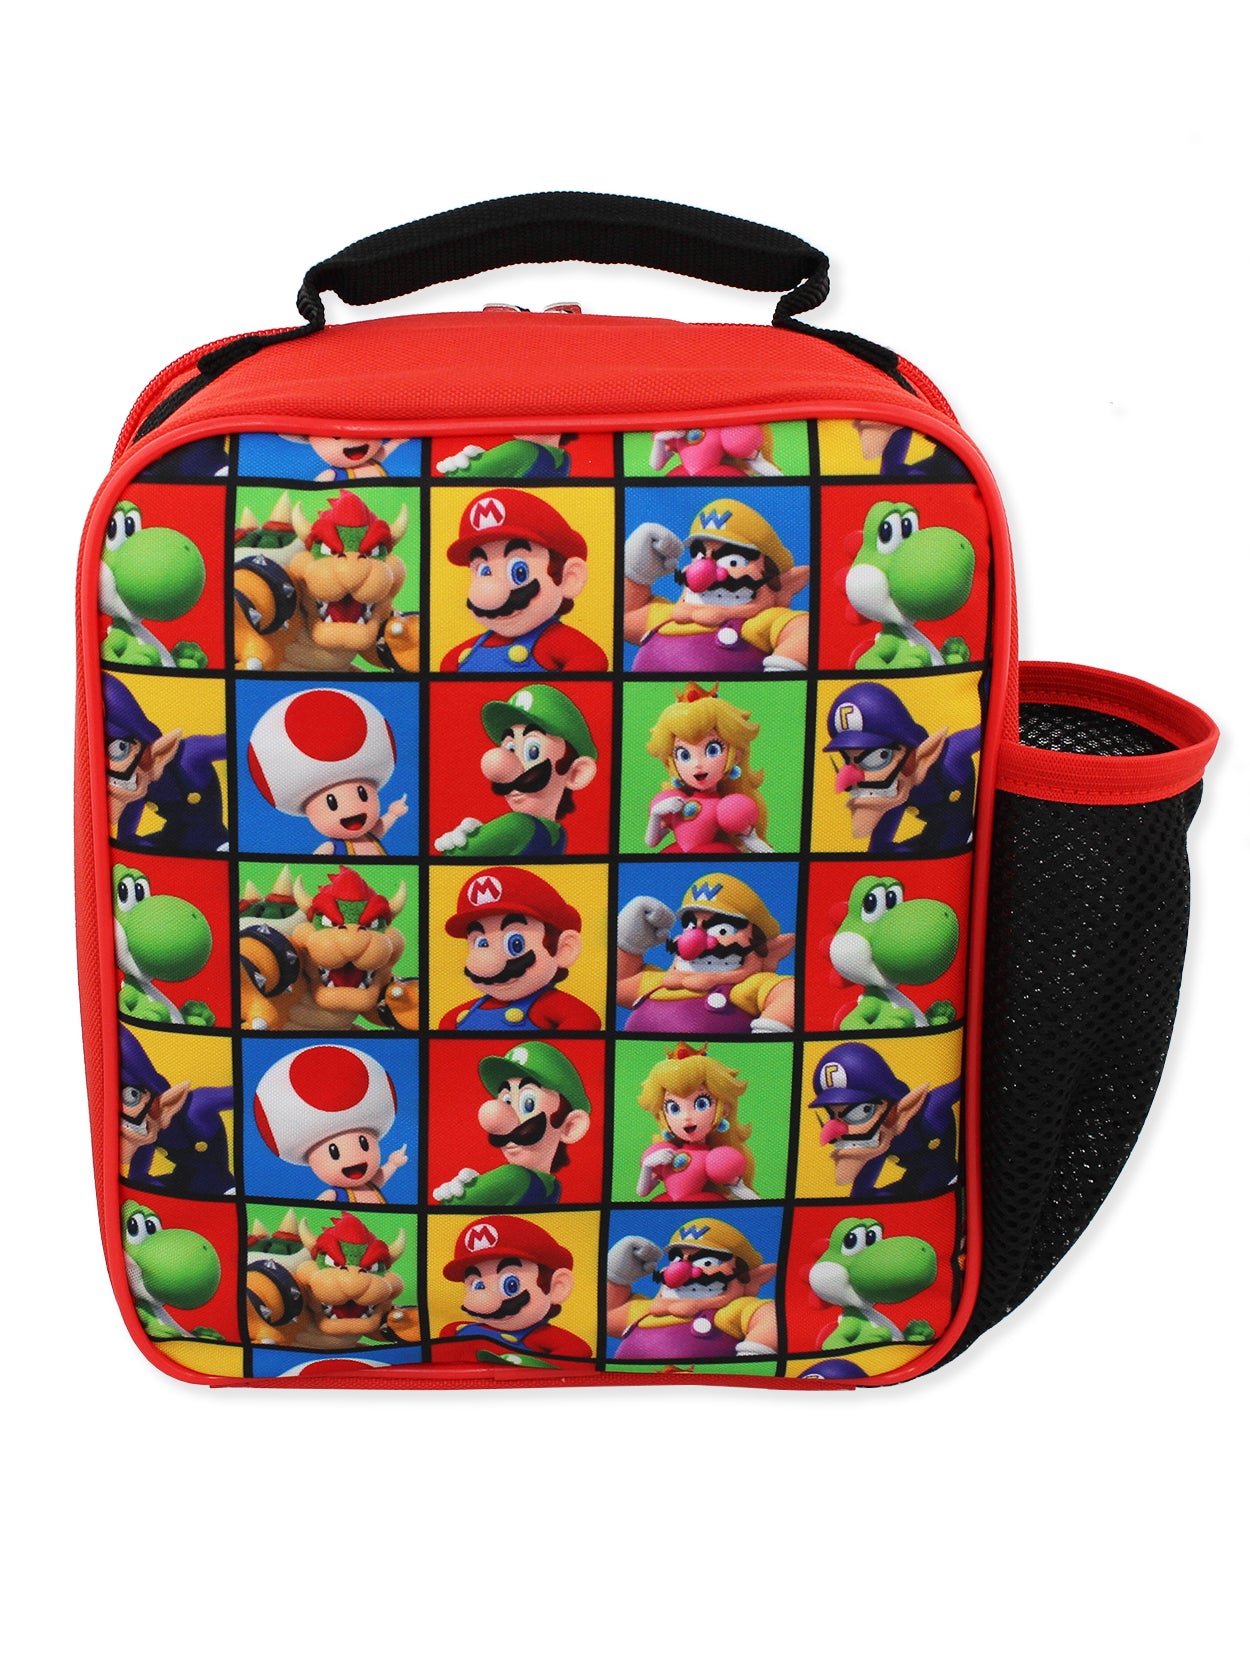 Super Mario Bros Luigi & Yoshi - BPA Free - Insulated Lunch Box Tote NWT